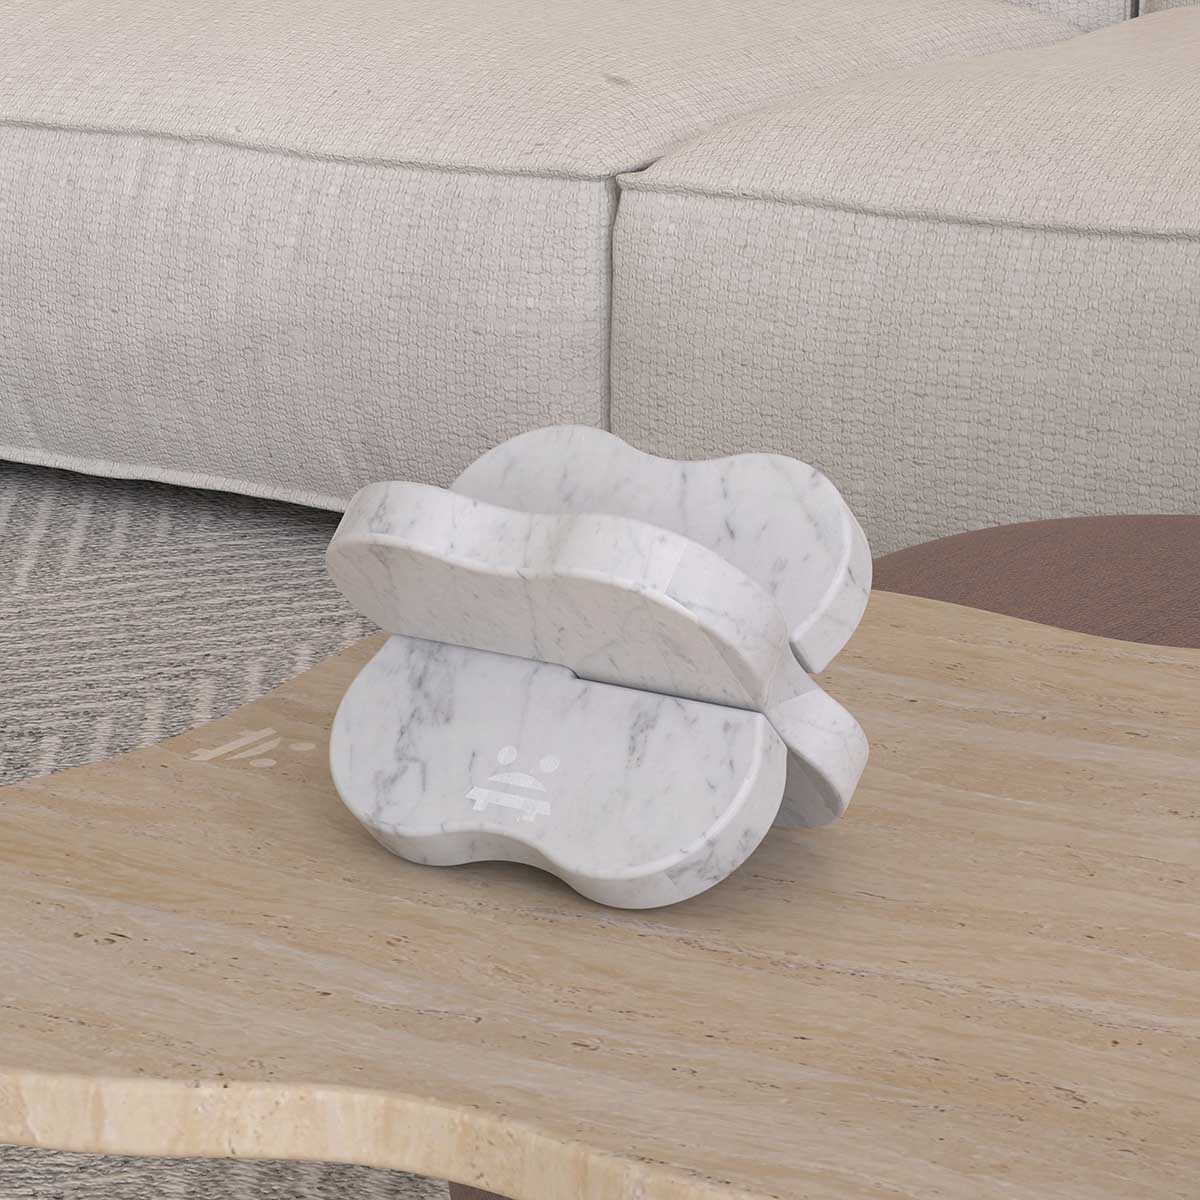 OIXDESIGN LakeMist Table Decor, Italian Carrara Marble, Left Side View